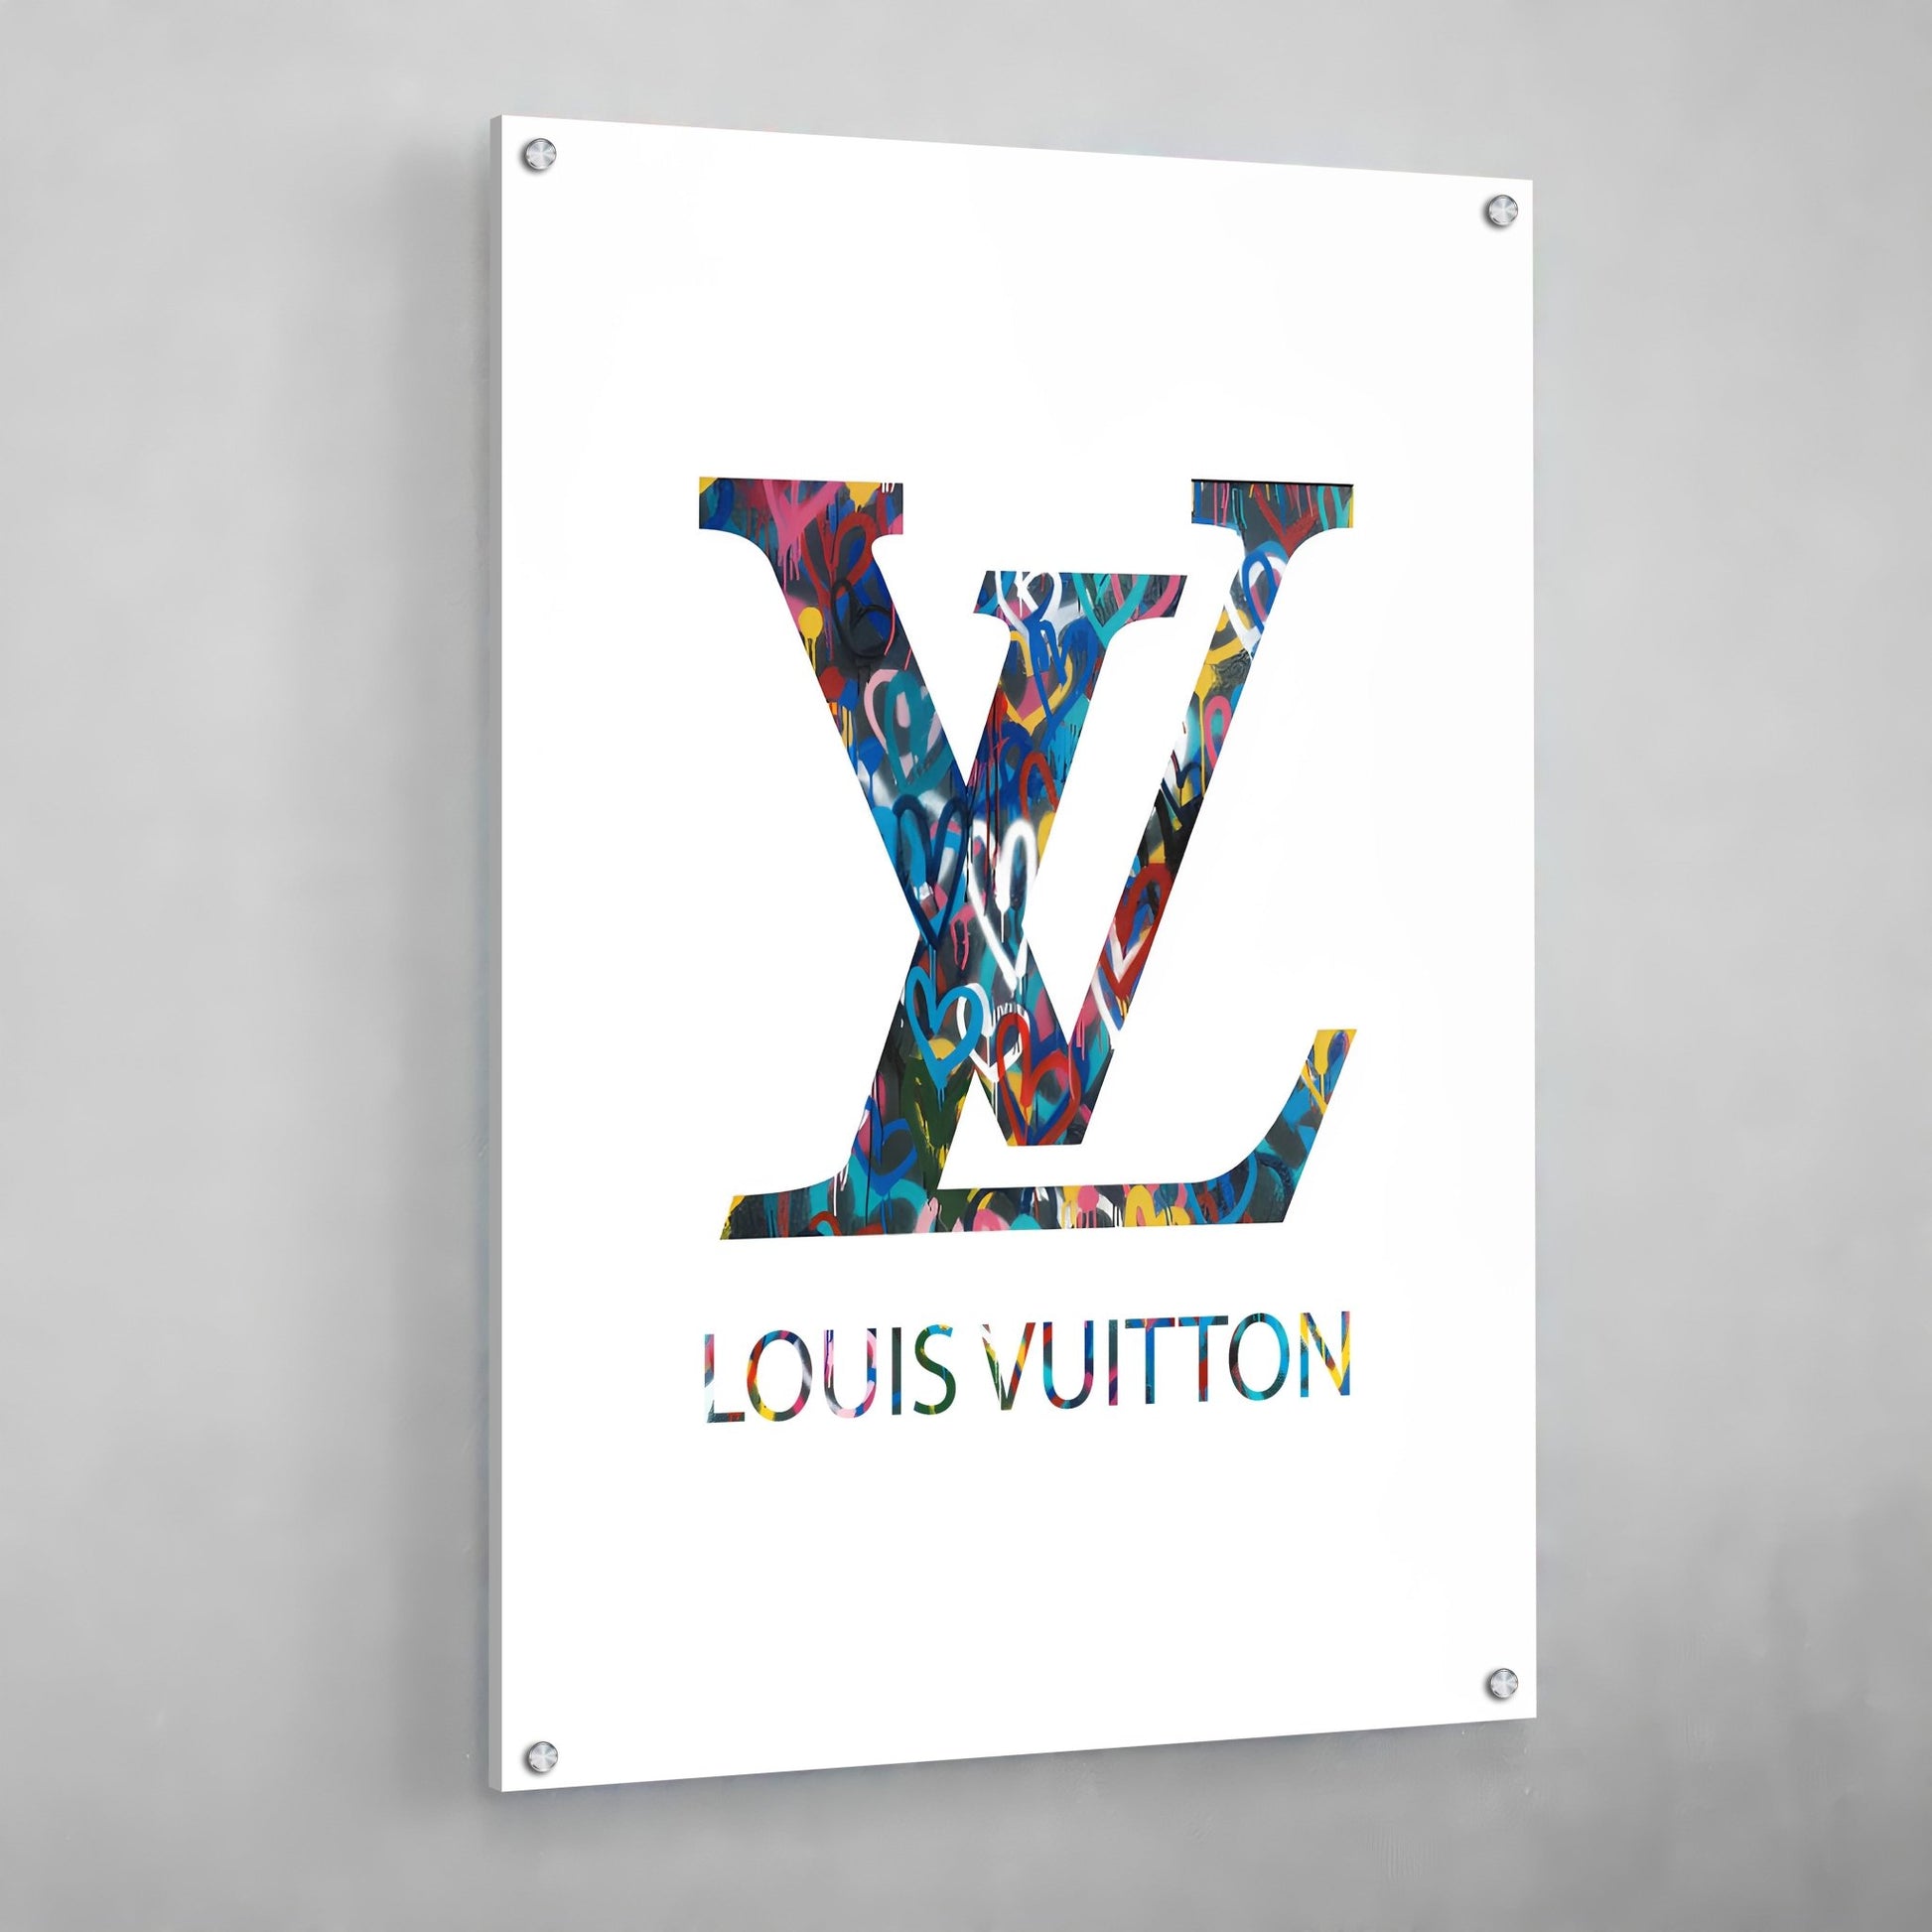 Louis Vuitton Pop Art Canvas, Splash of Arts